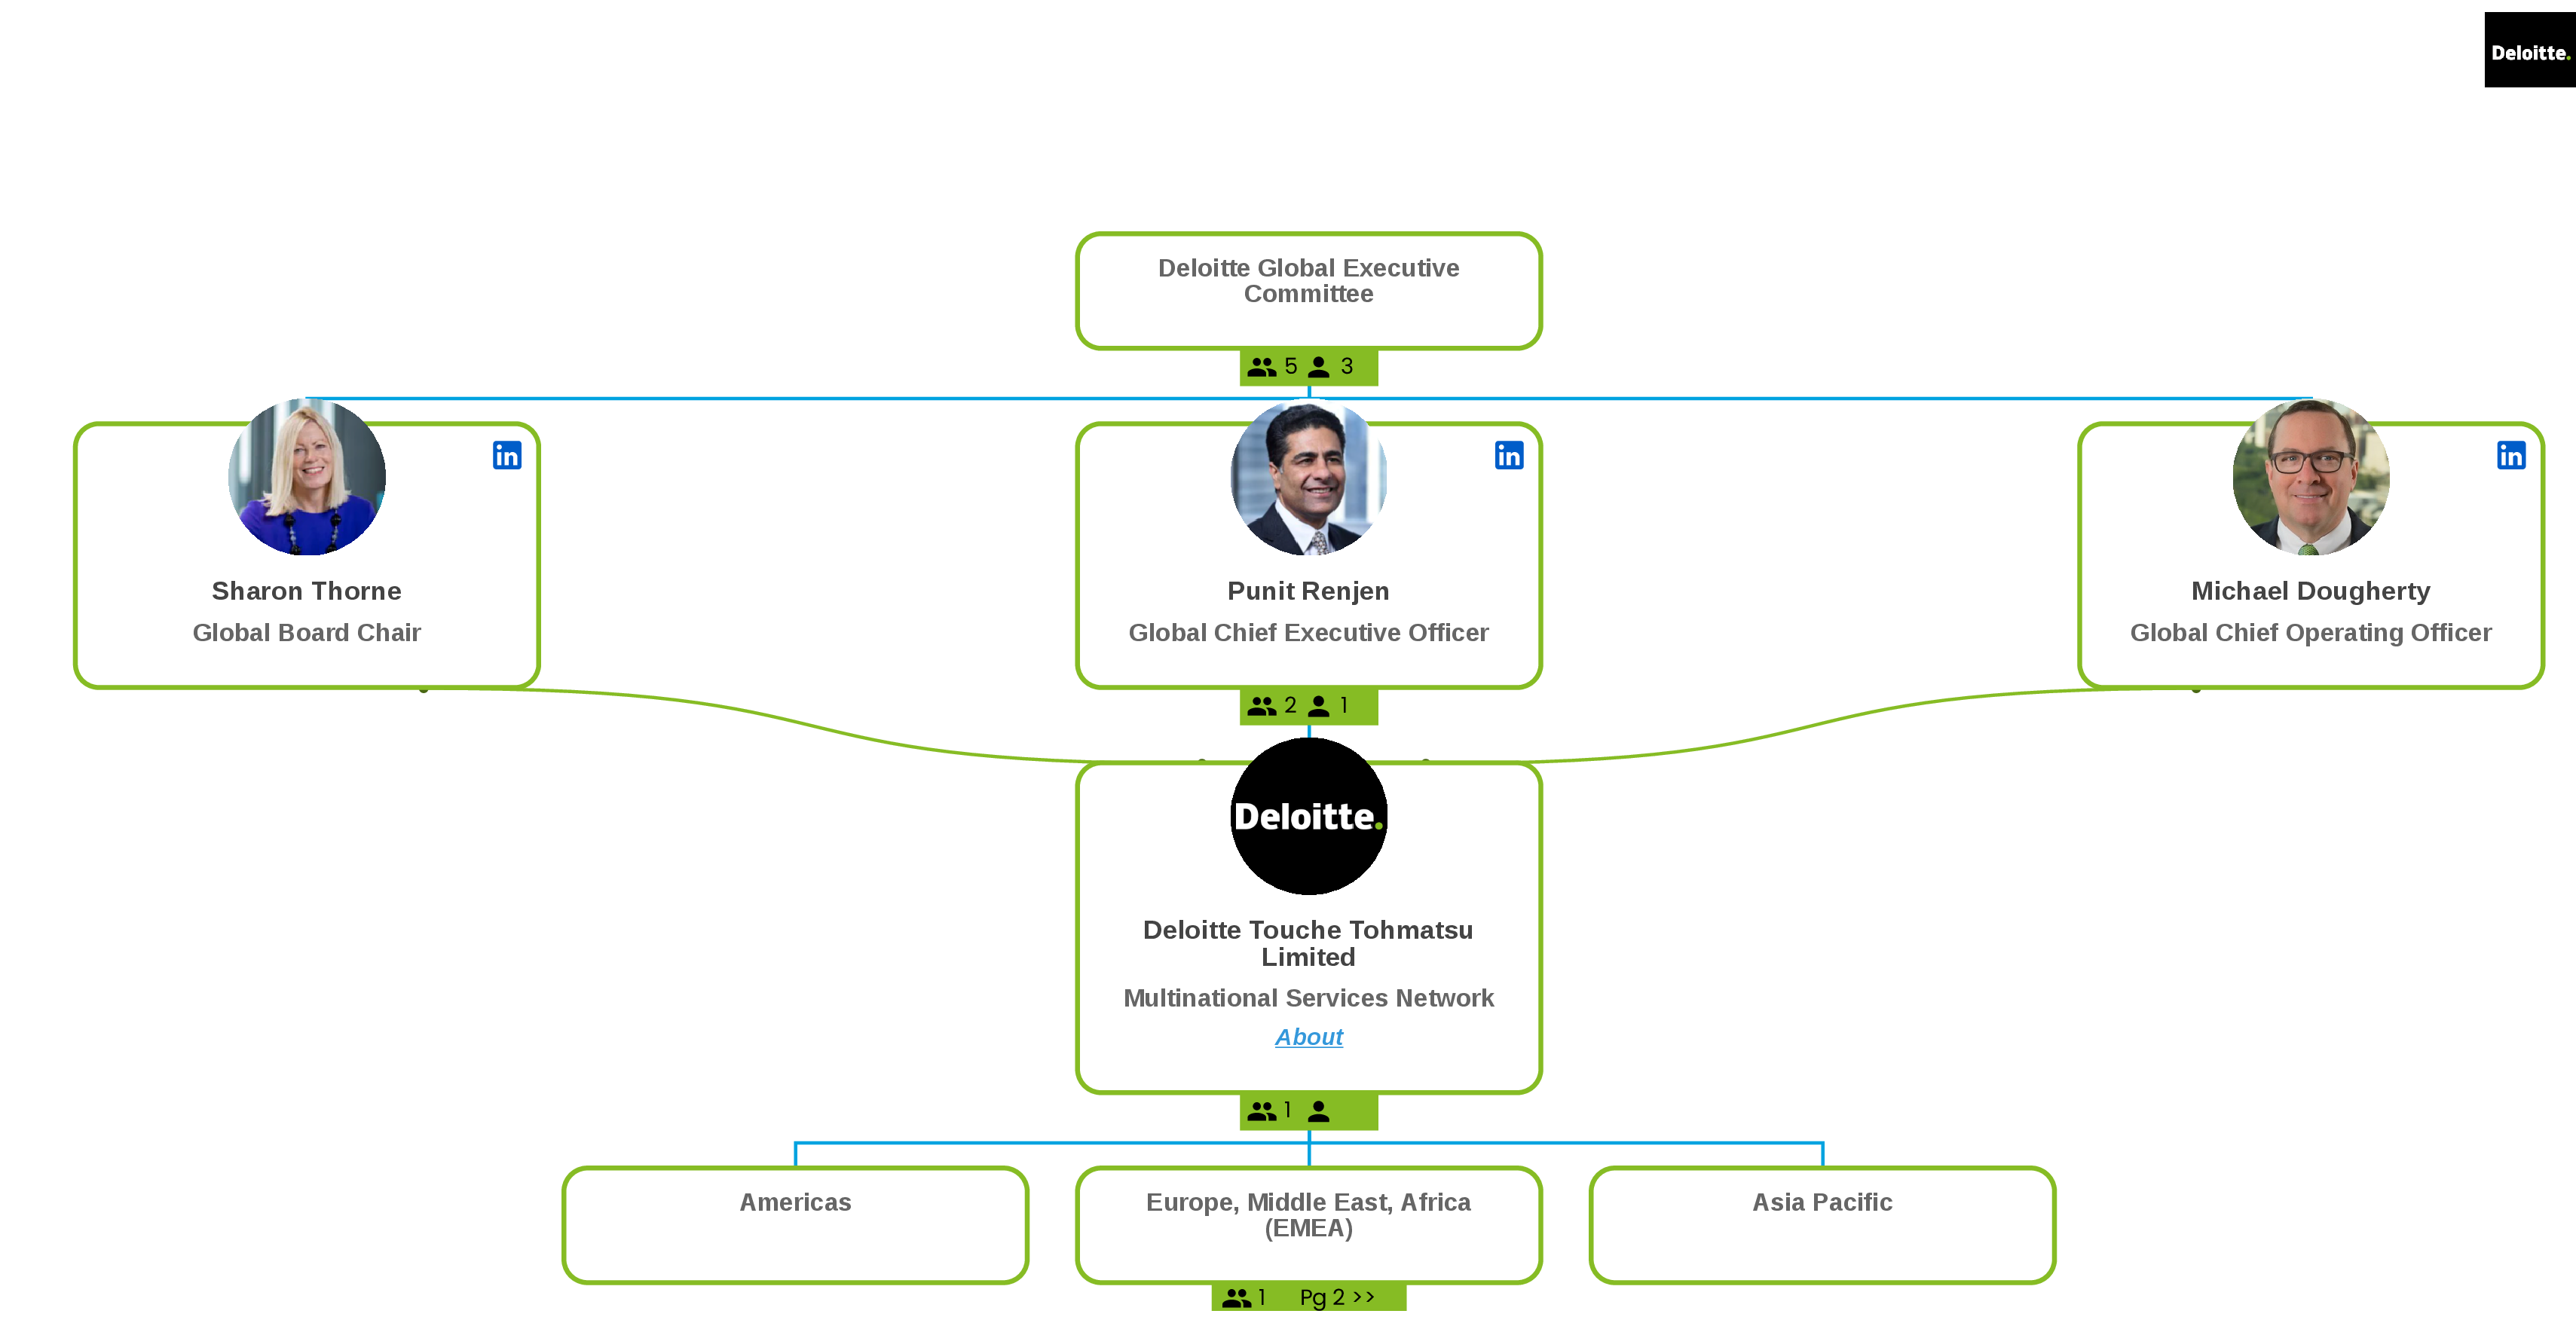 Deloitte's Organizational Structure